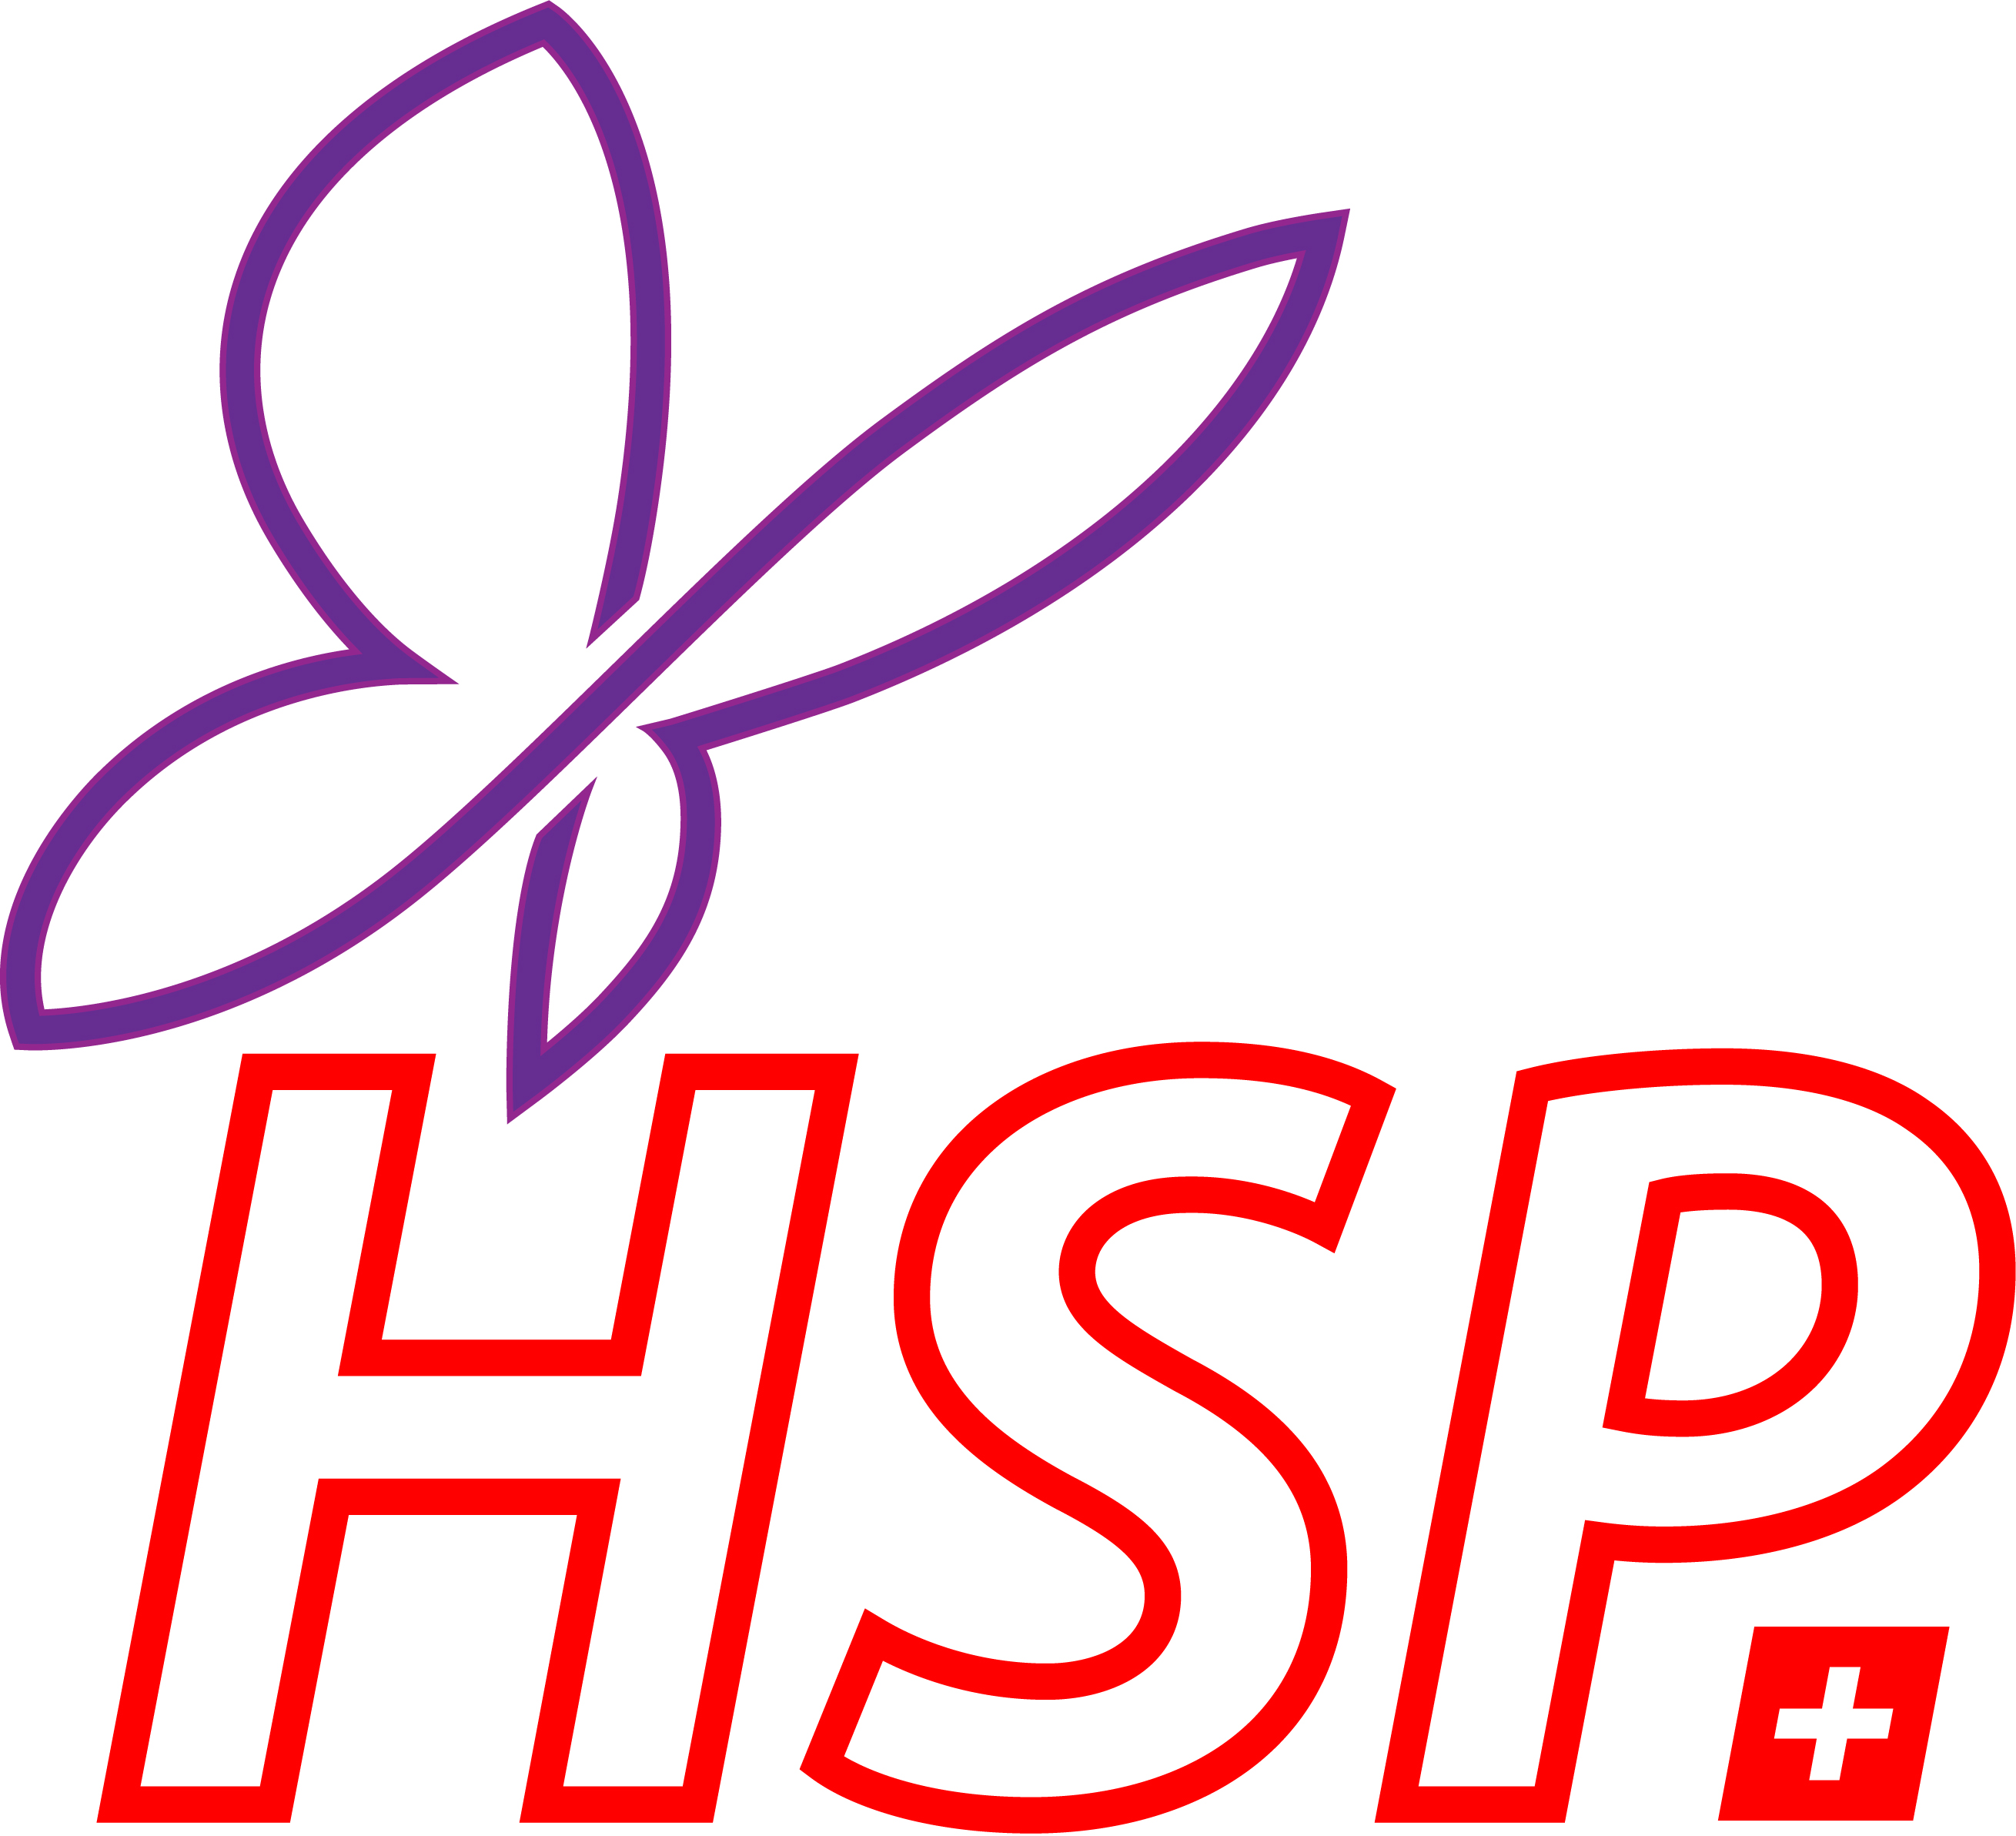 High Sensitive Persons (HSP) Switzerland